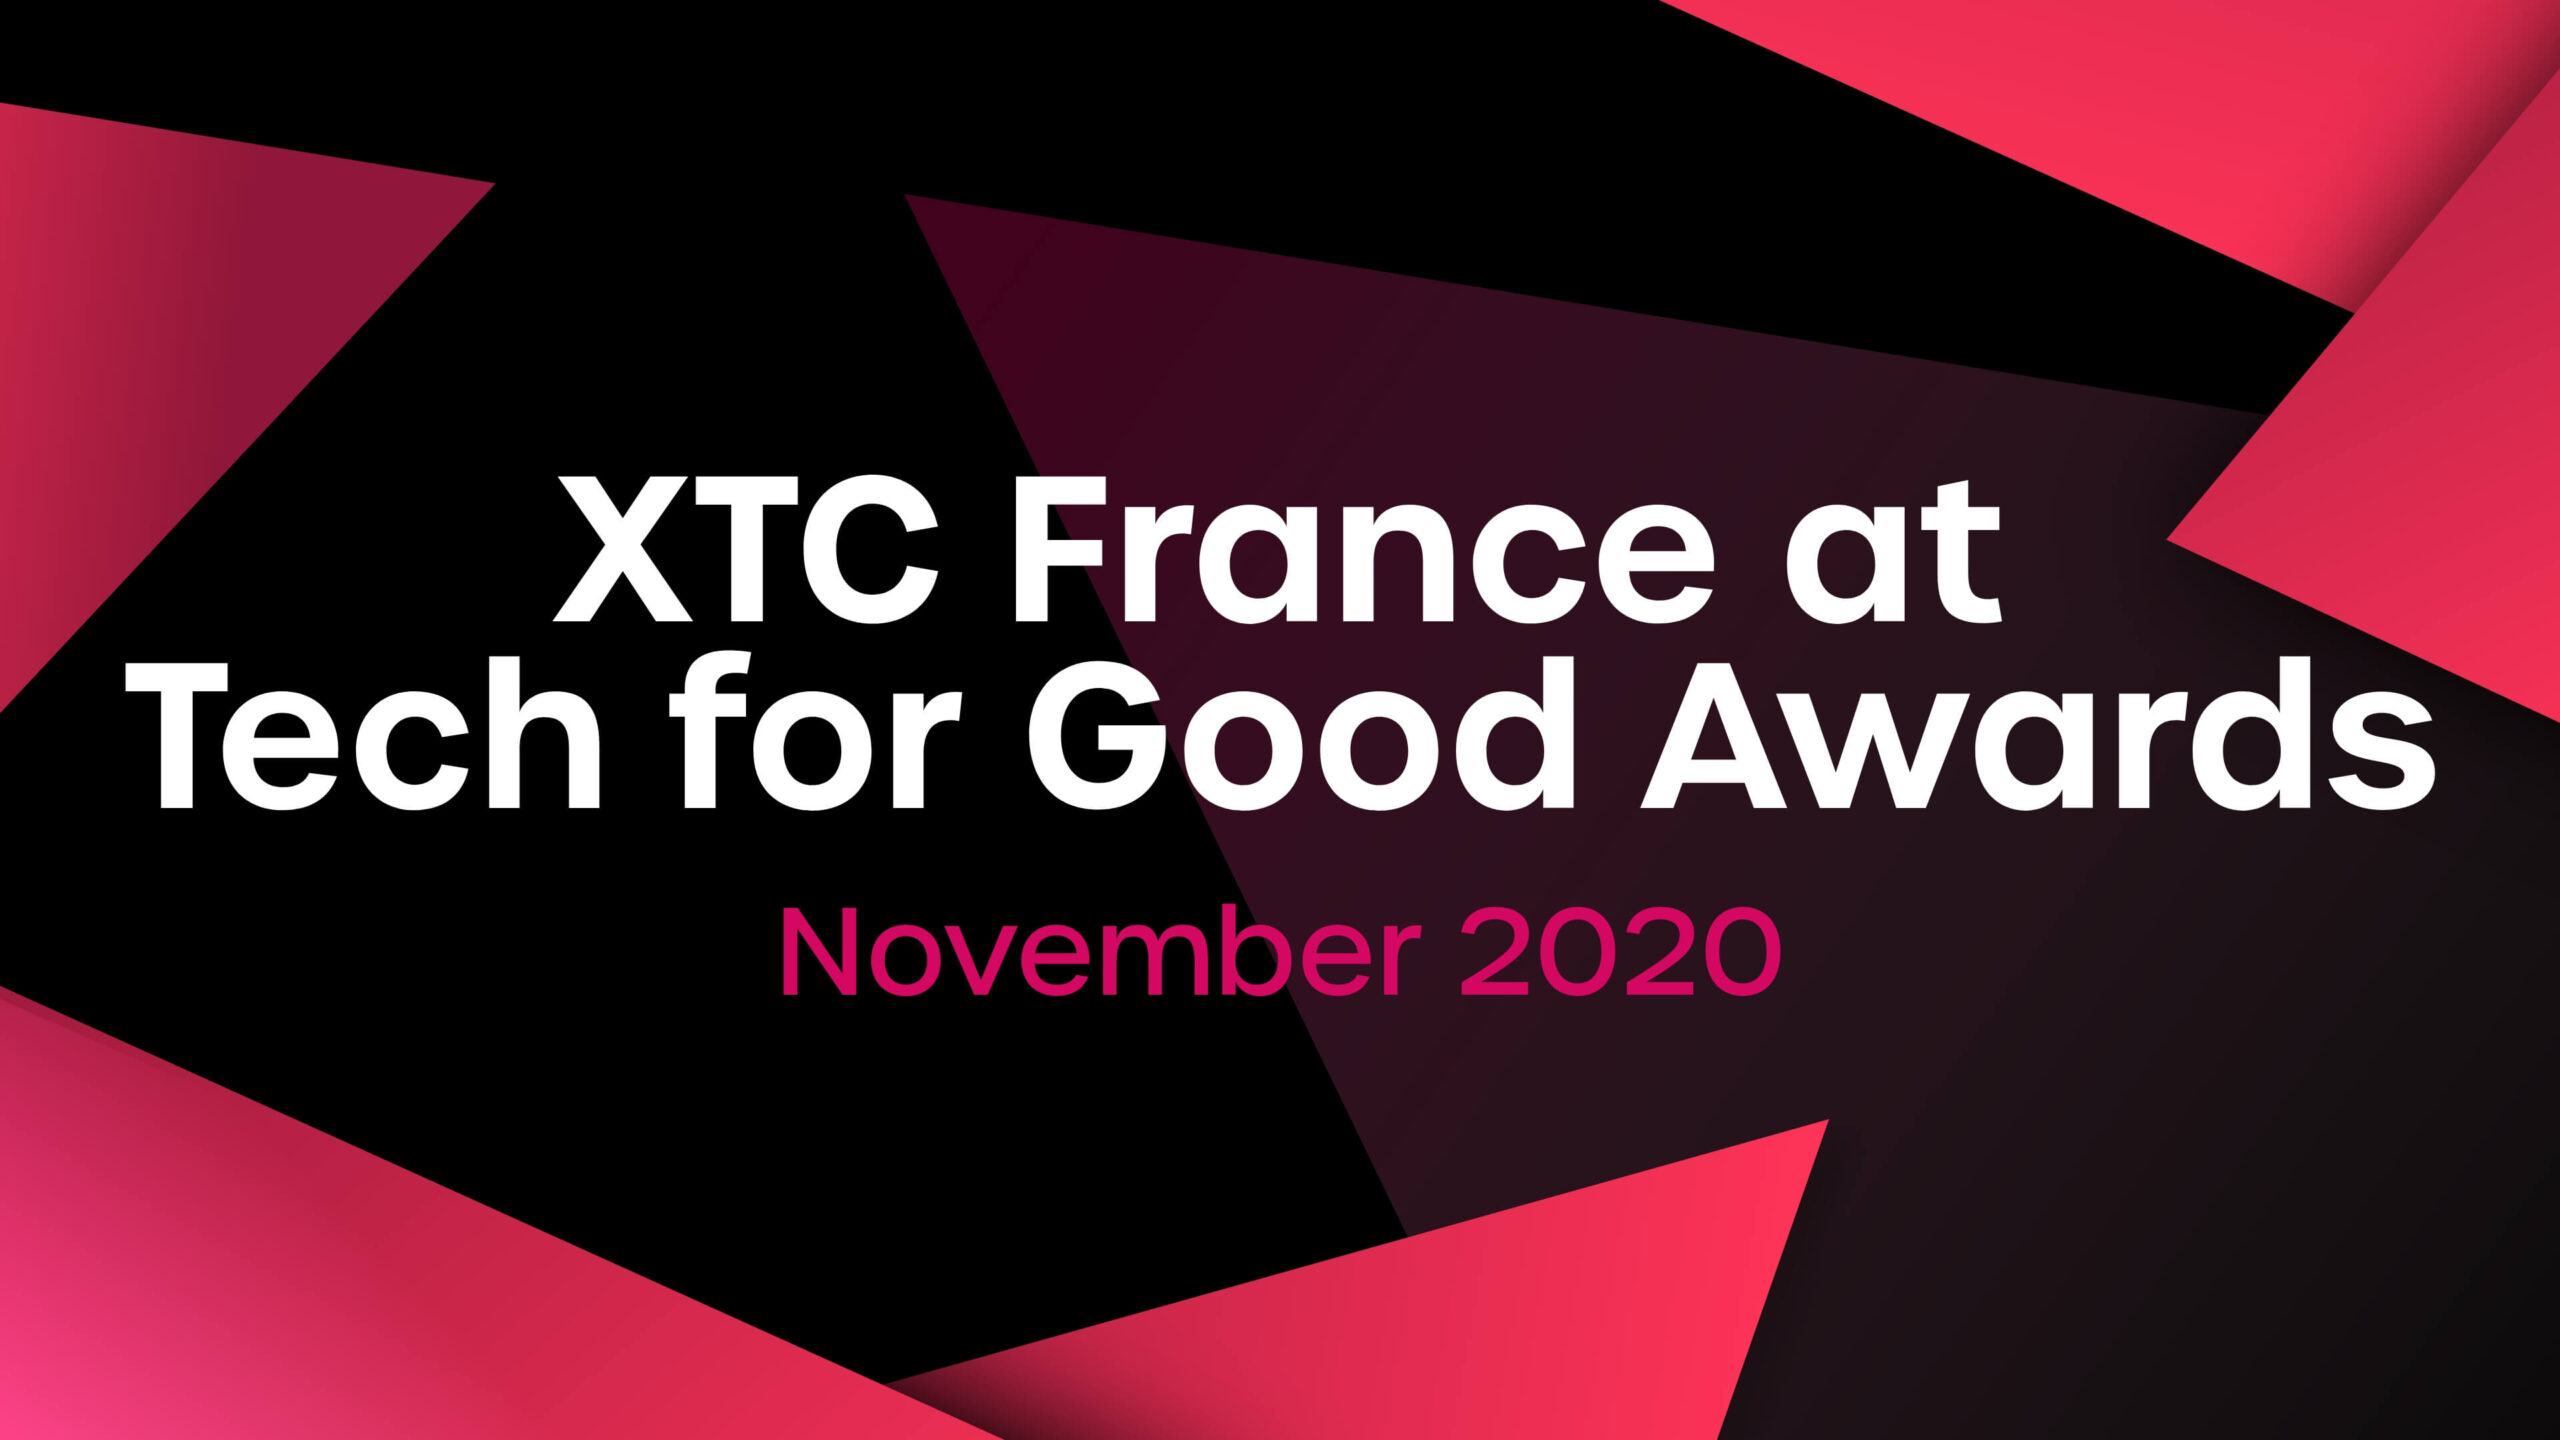 XTC France at Tech for Good Awards